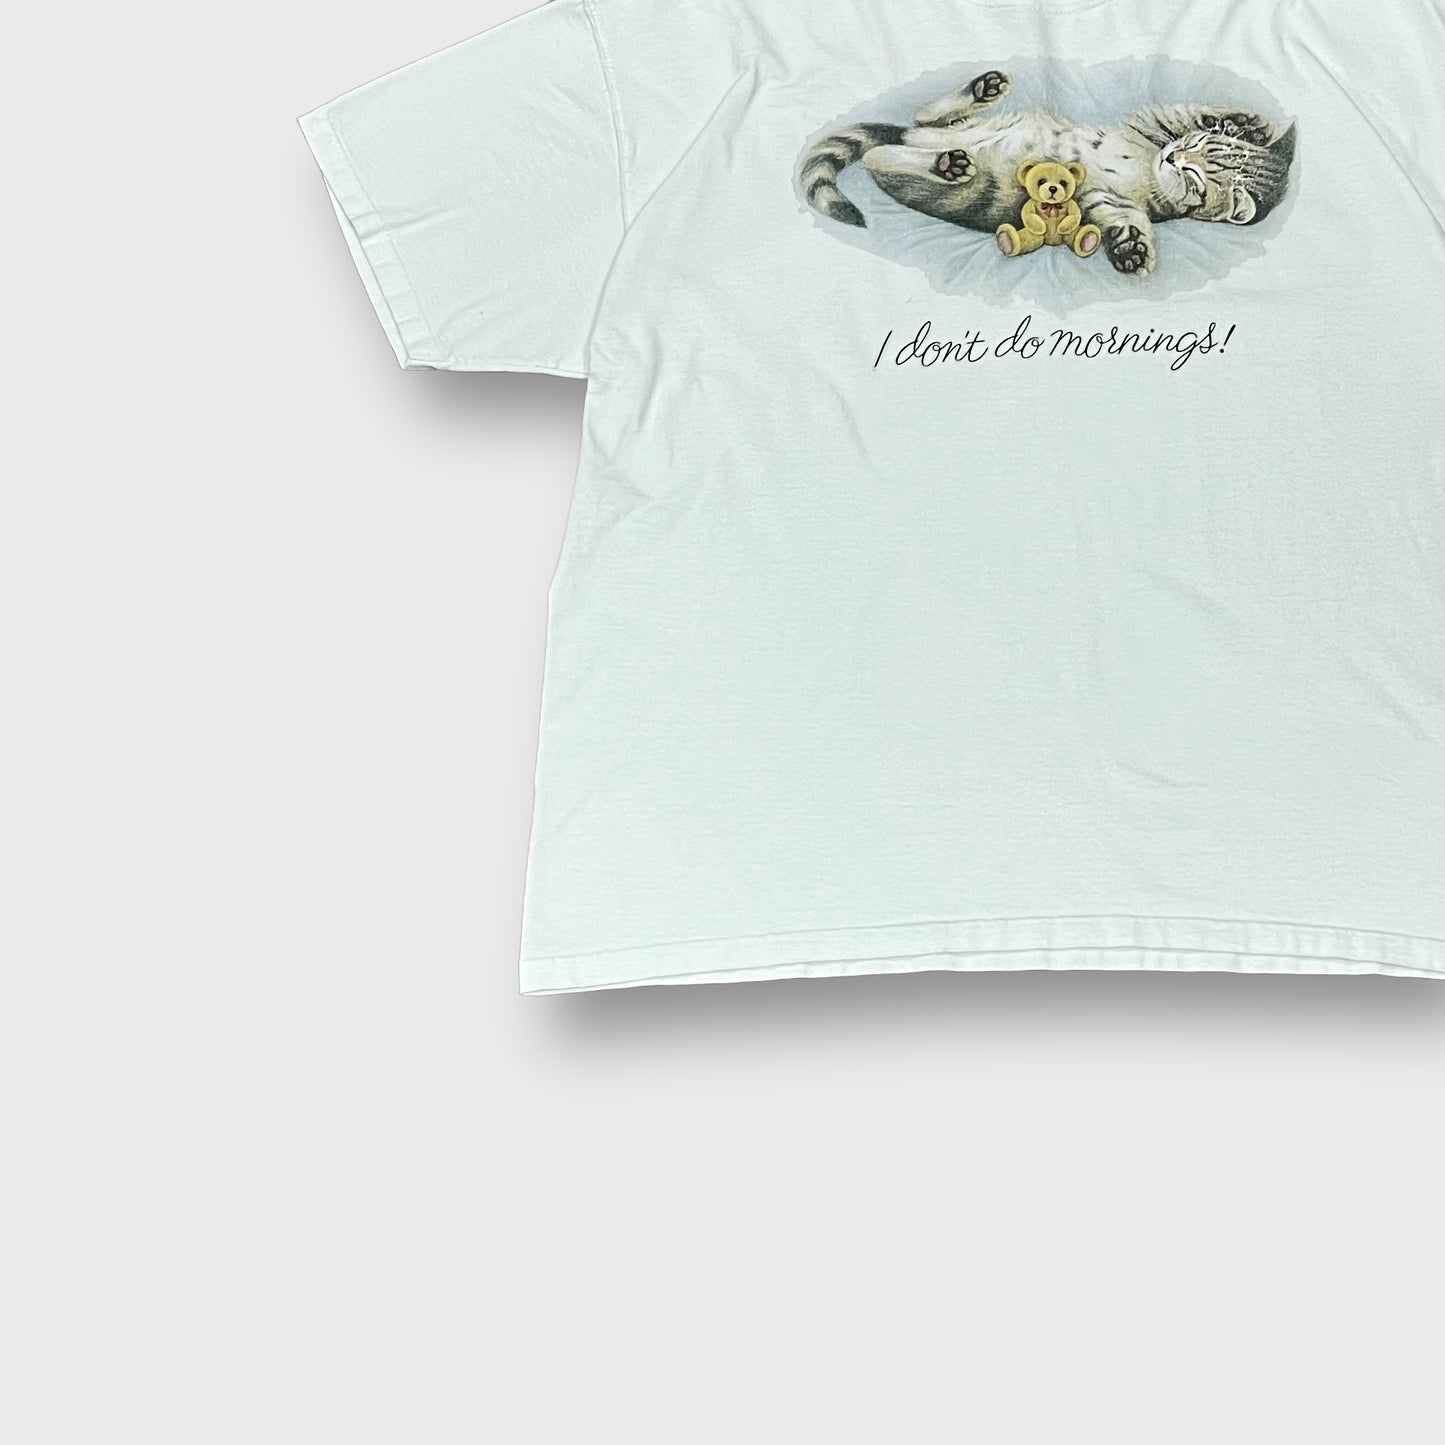 00’s animal t-shirt